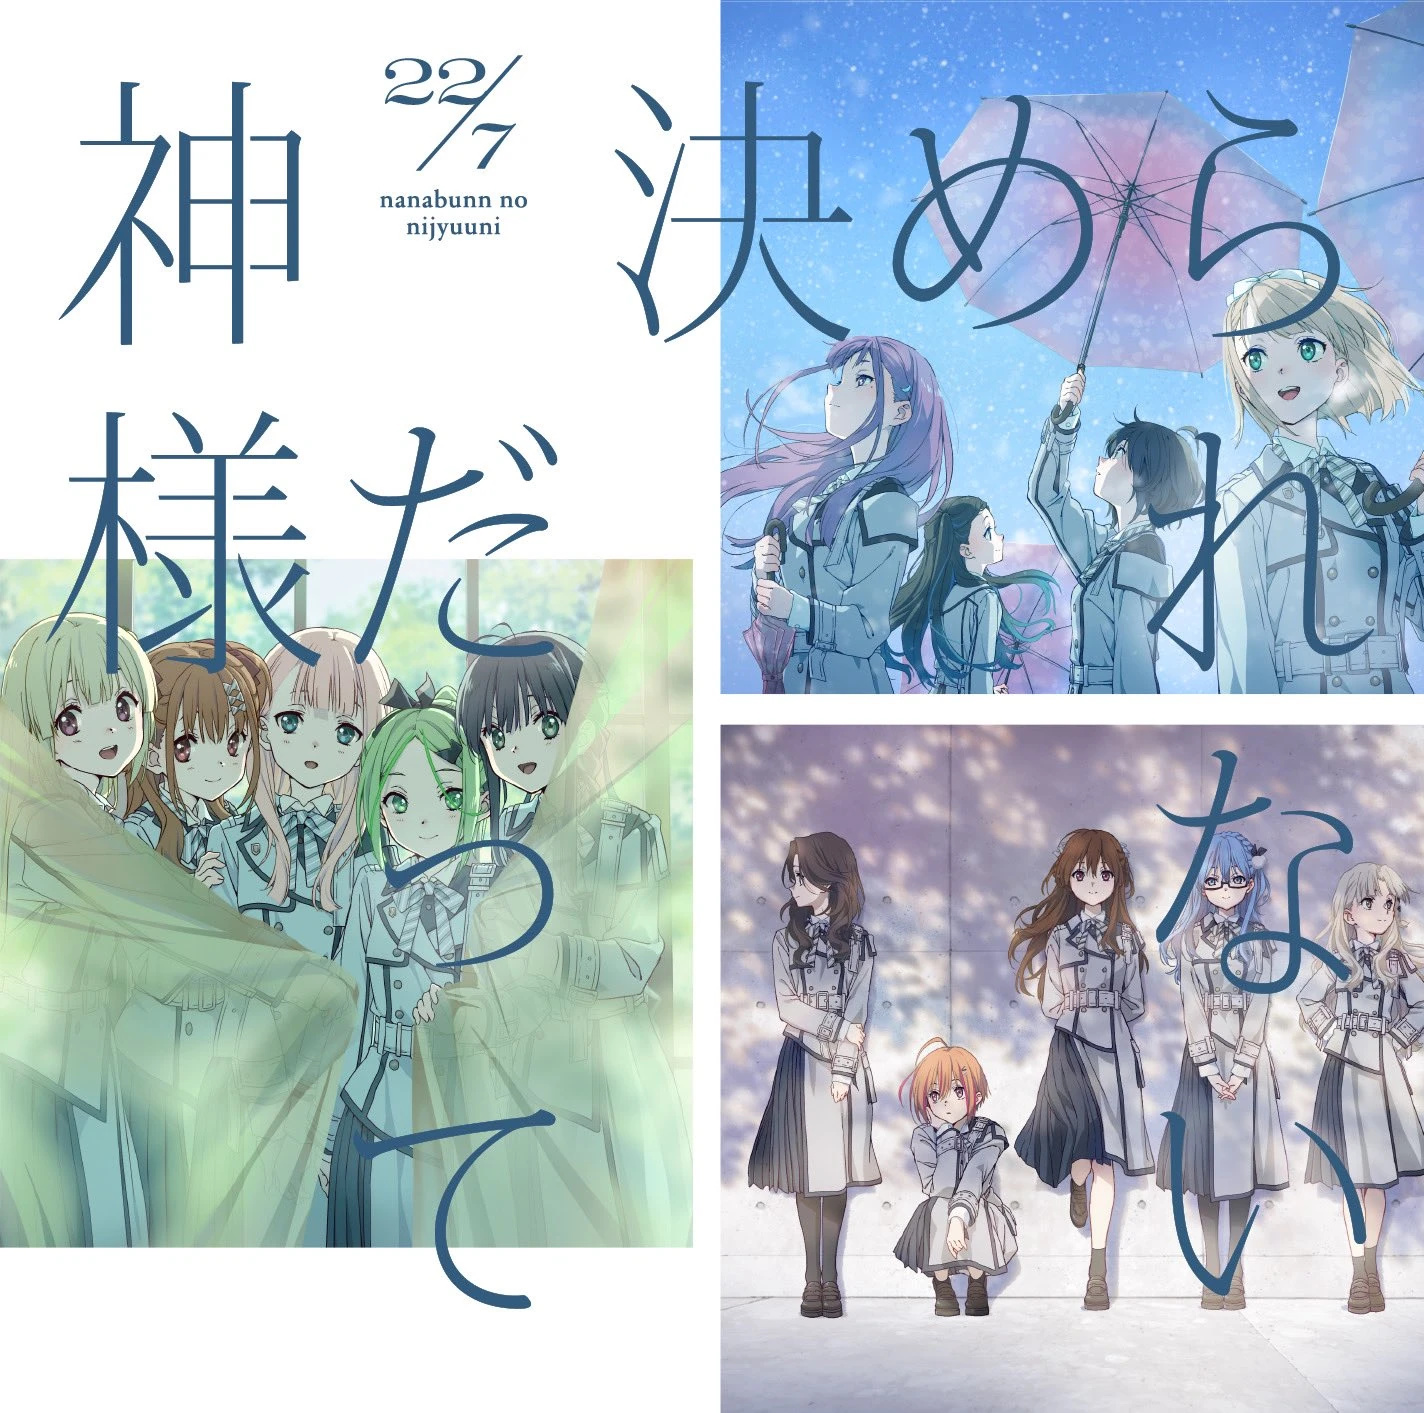 22/7 & Akagumi (紅組) — Harero (ハレロ) cover artwork